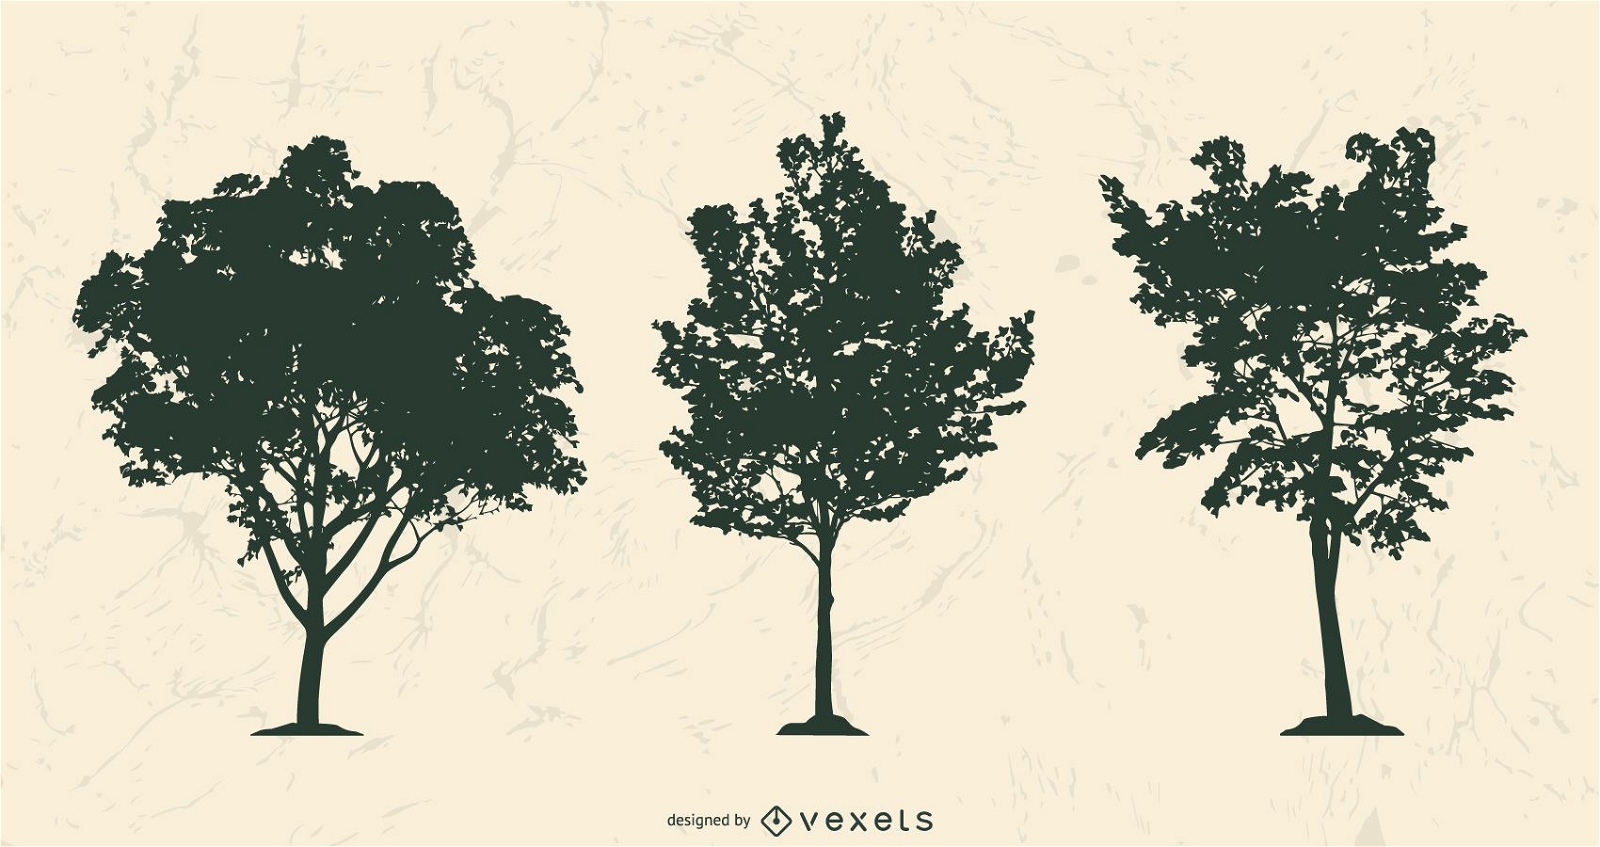 Realistic tree silhouettes set